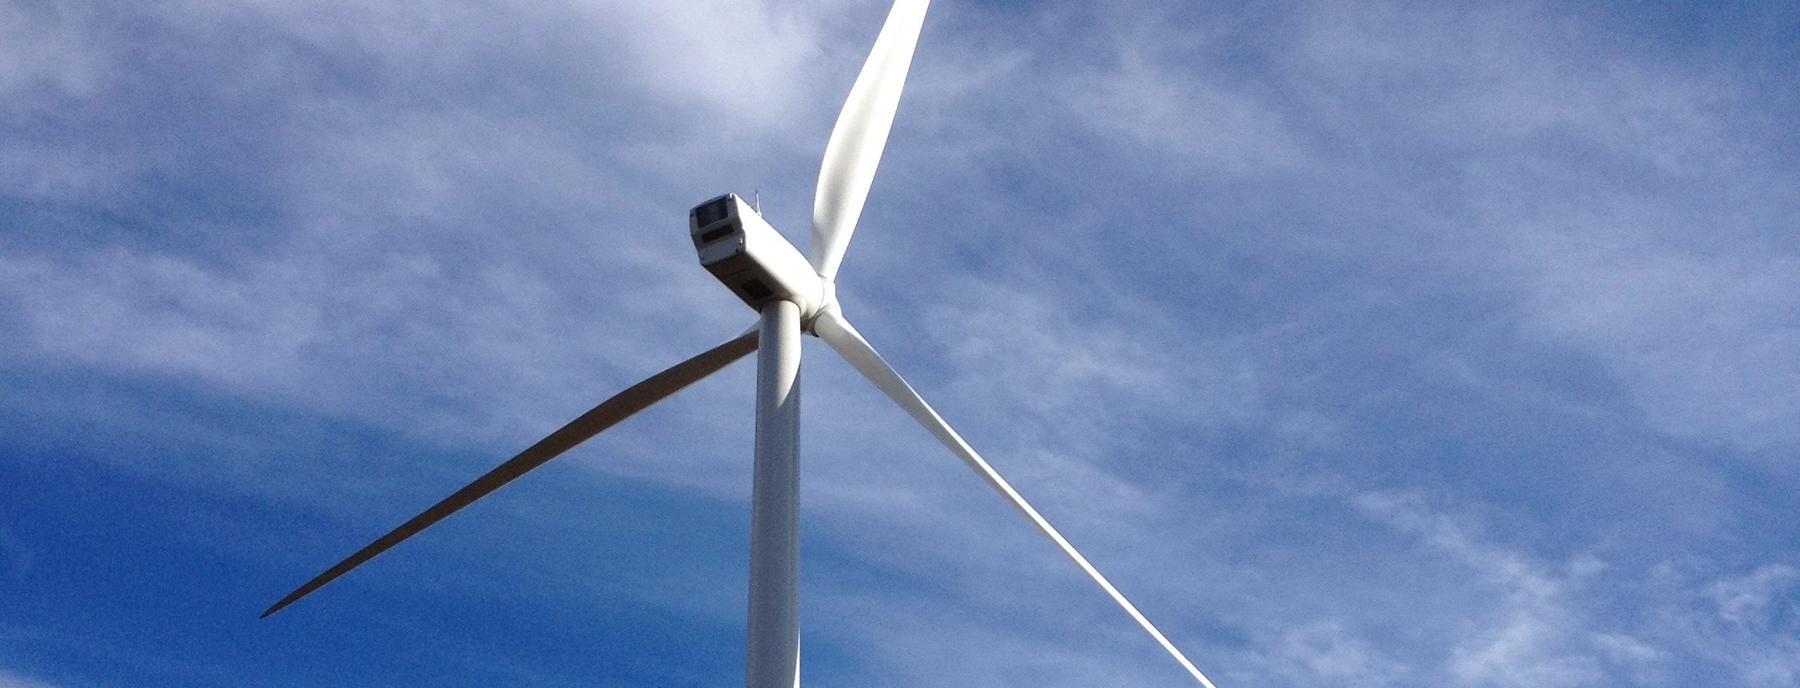 Bild på ett vindkraftverk